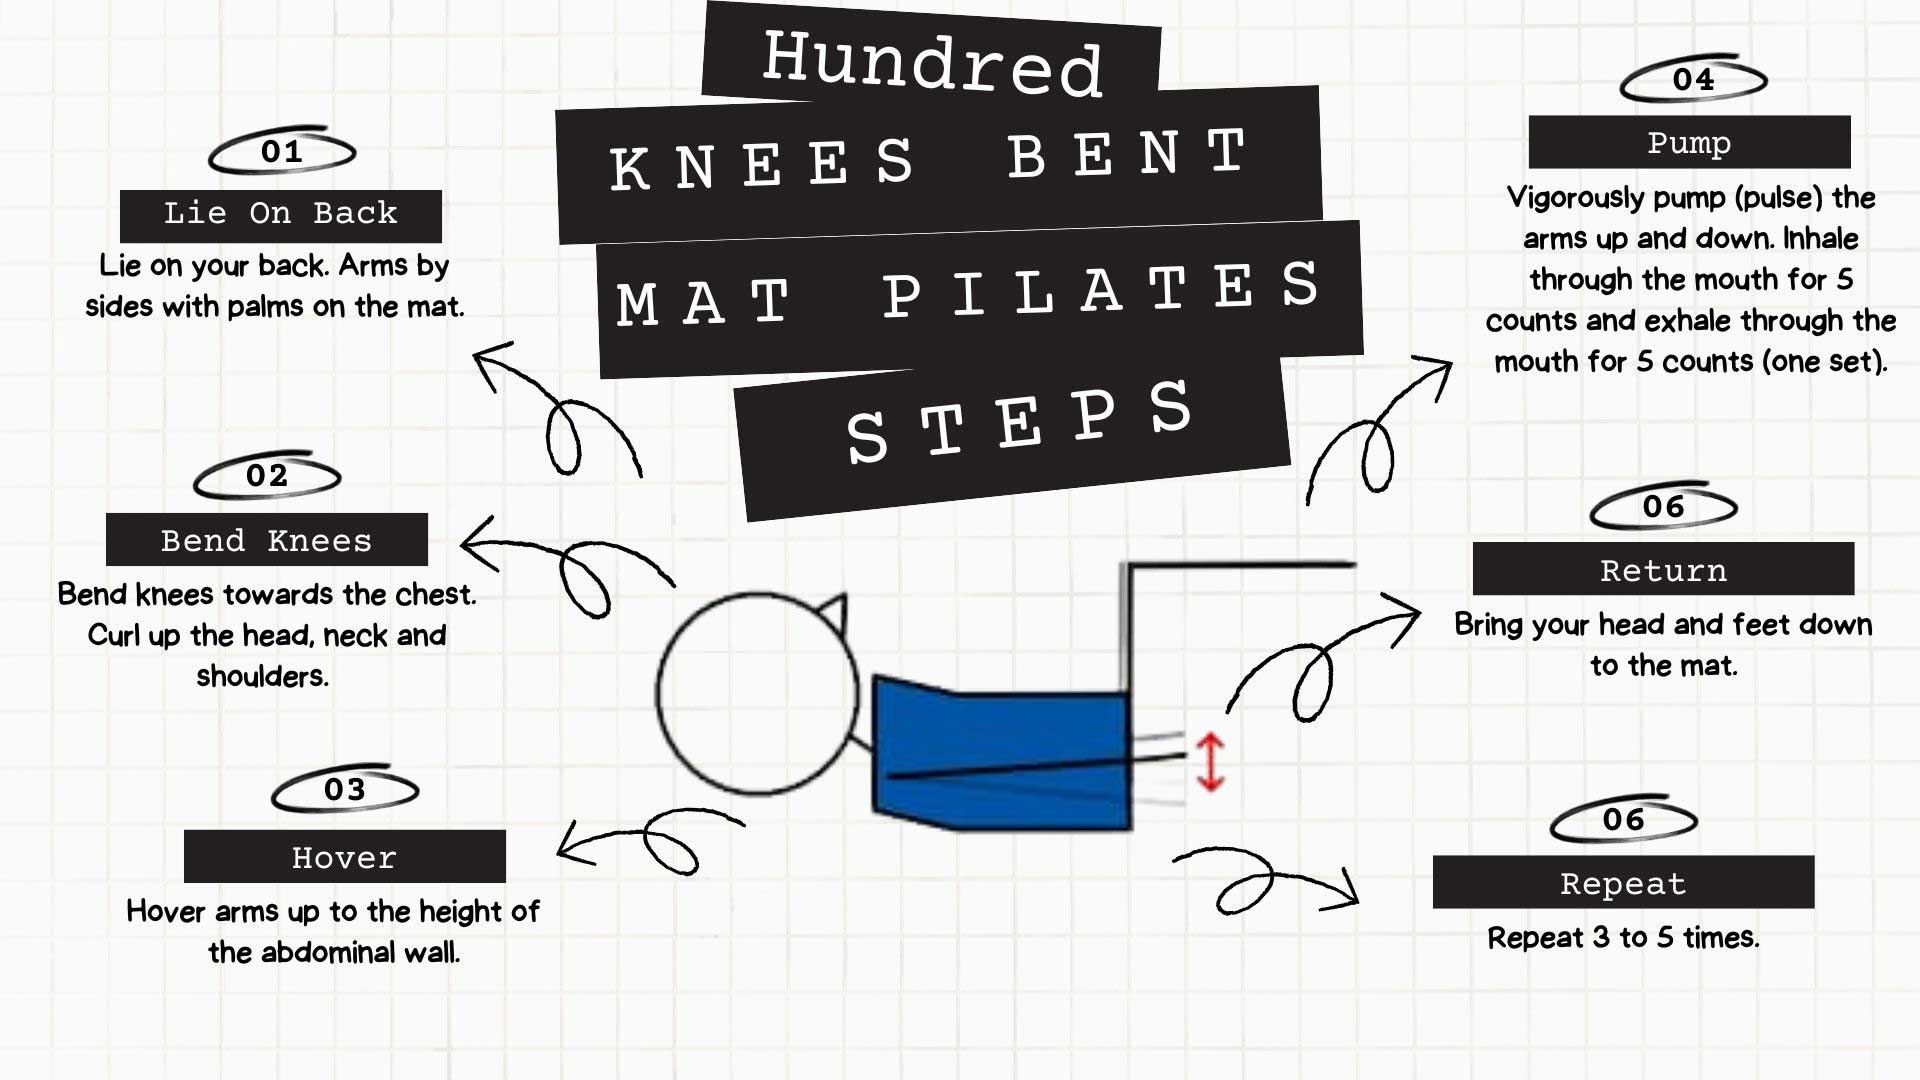 Hundred Knees Bent Mat Pilates Infographic